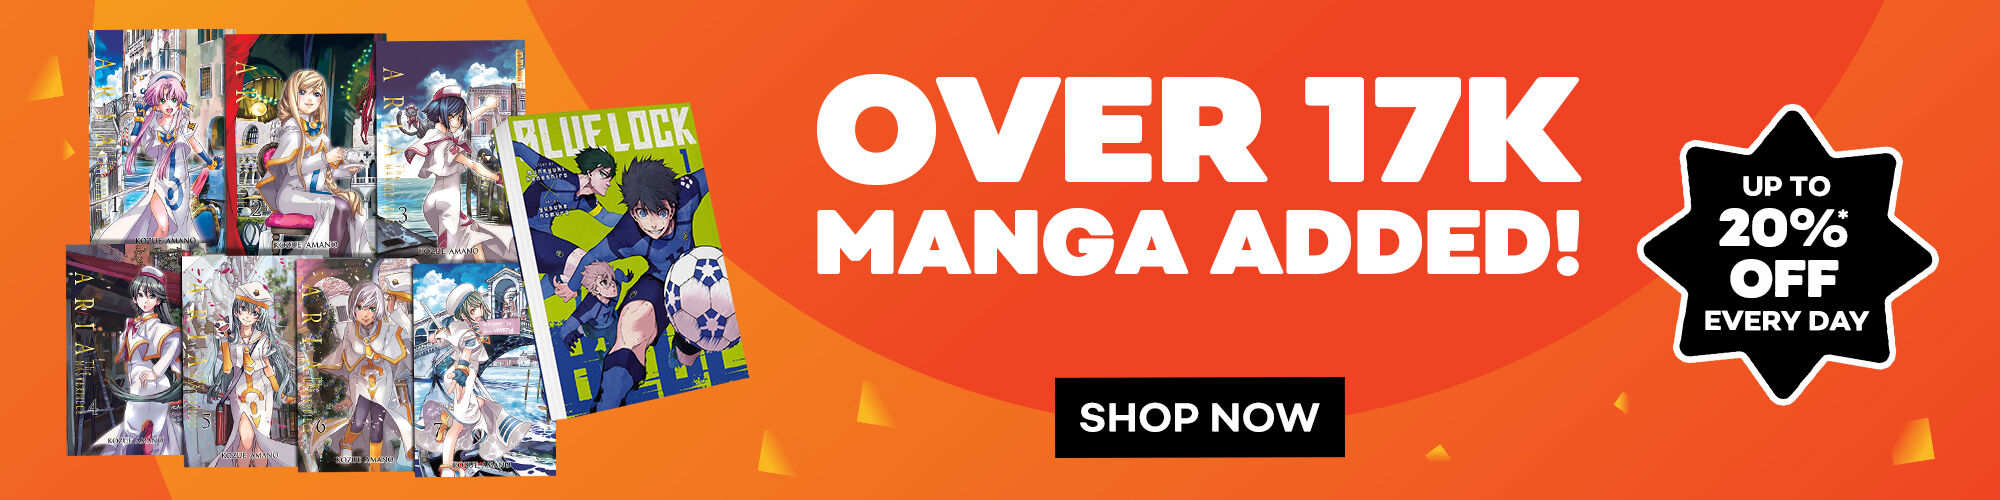 Animes, mangas, anytings Japanese online sales. | Animes, mangas, anytings  Japanese online sales.